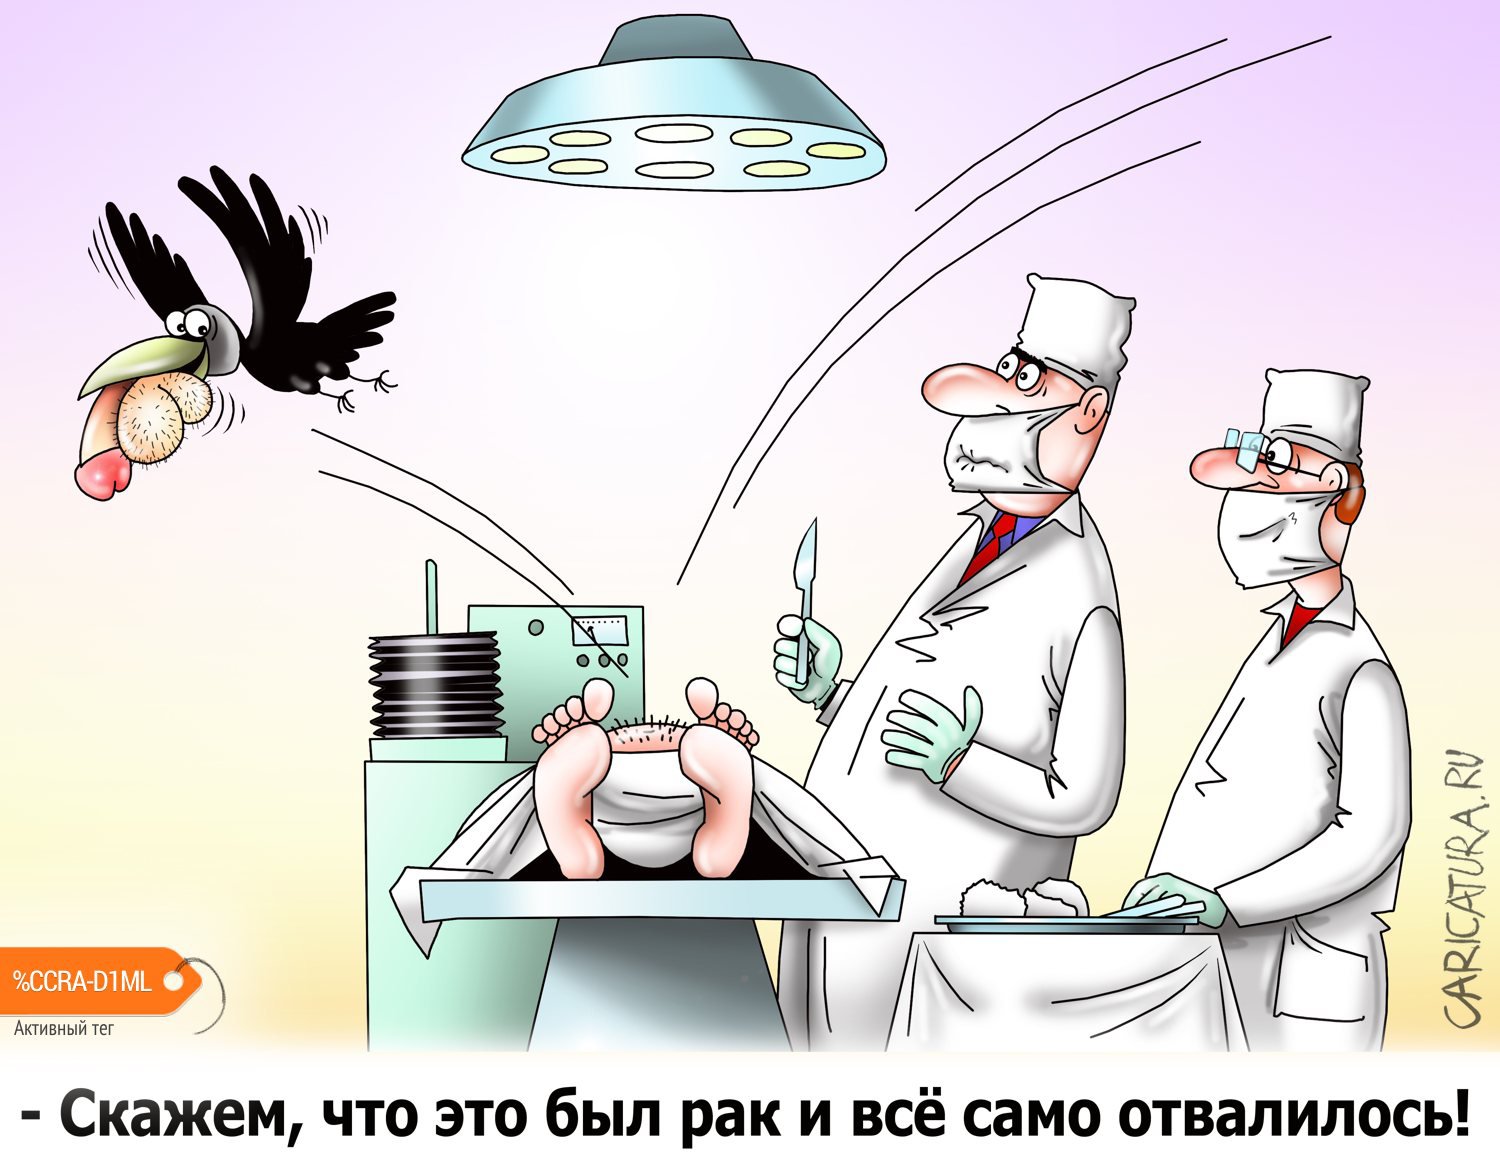 Карикатура "Москвич хочет наказать врачей за ампутацию члена", Сергей Корсун